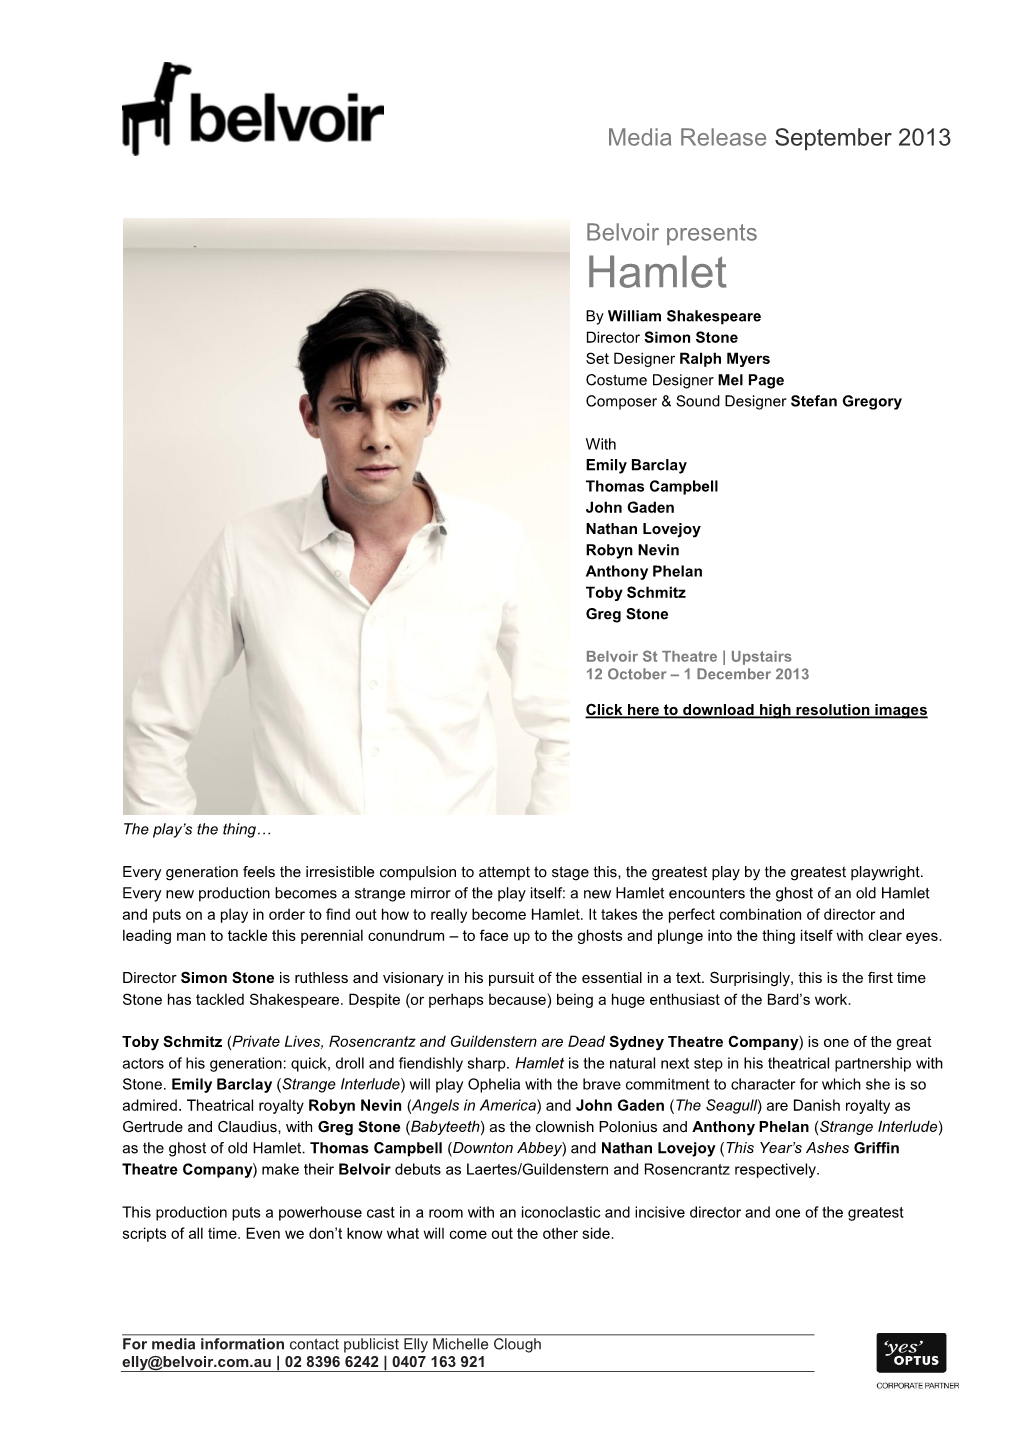 Hamlet by William Shakespeare Director Simon Stone Set Designer Ralph Myers Costume Designer Mel Page Composer & Sound Designer Stefan Gregory